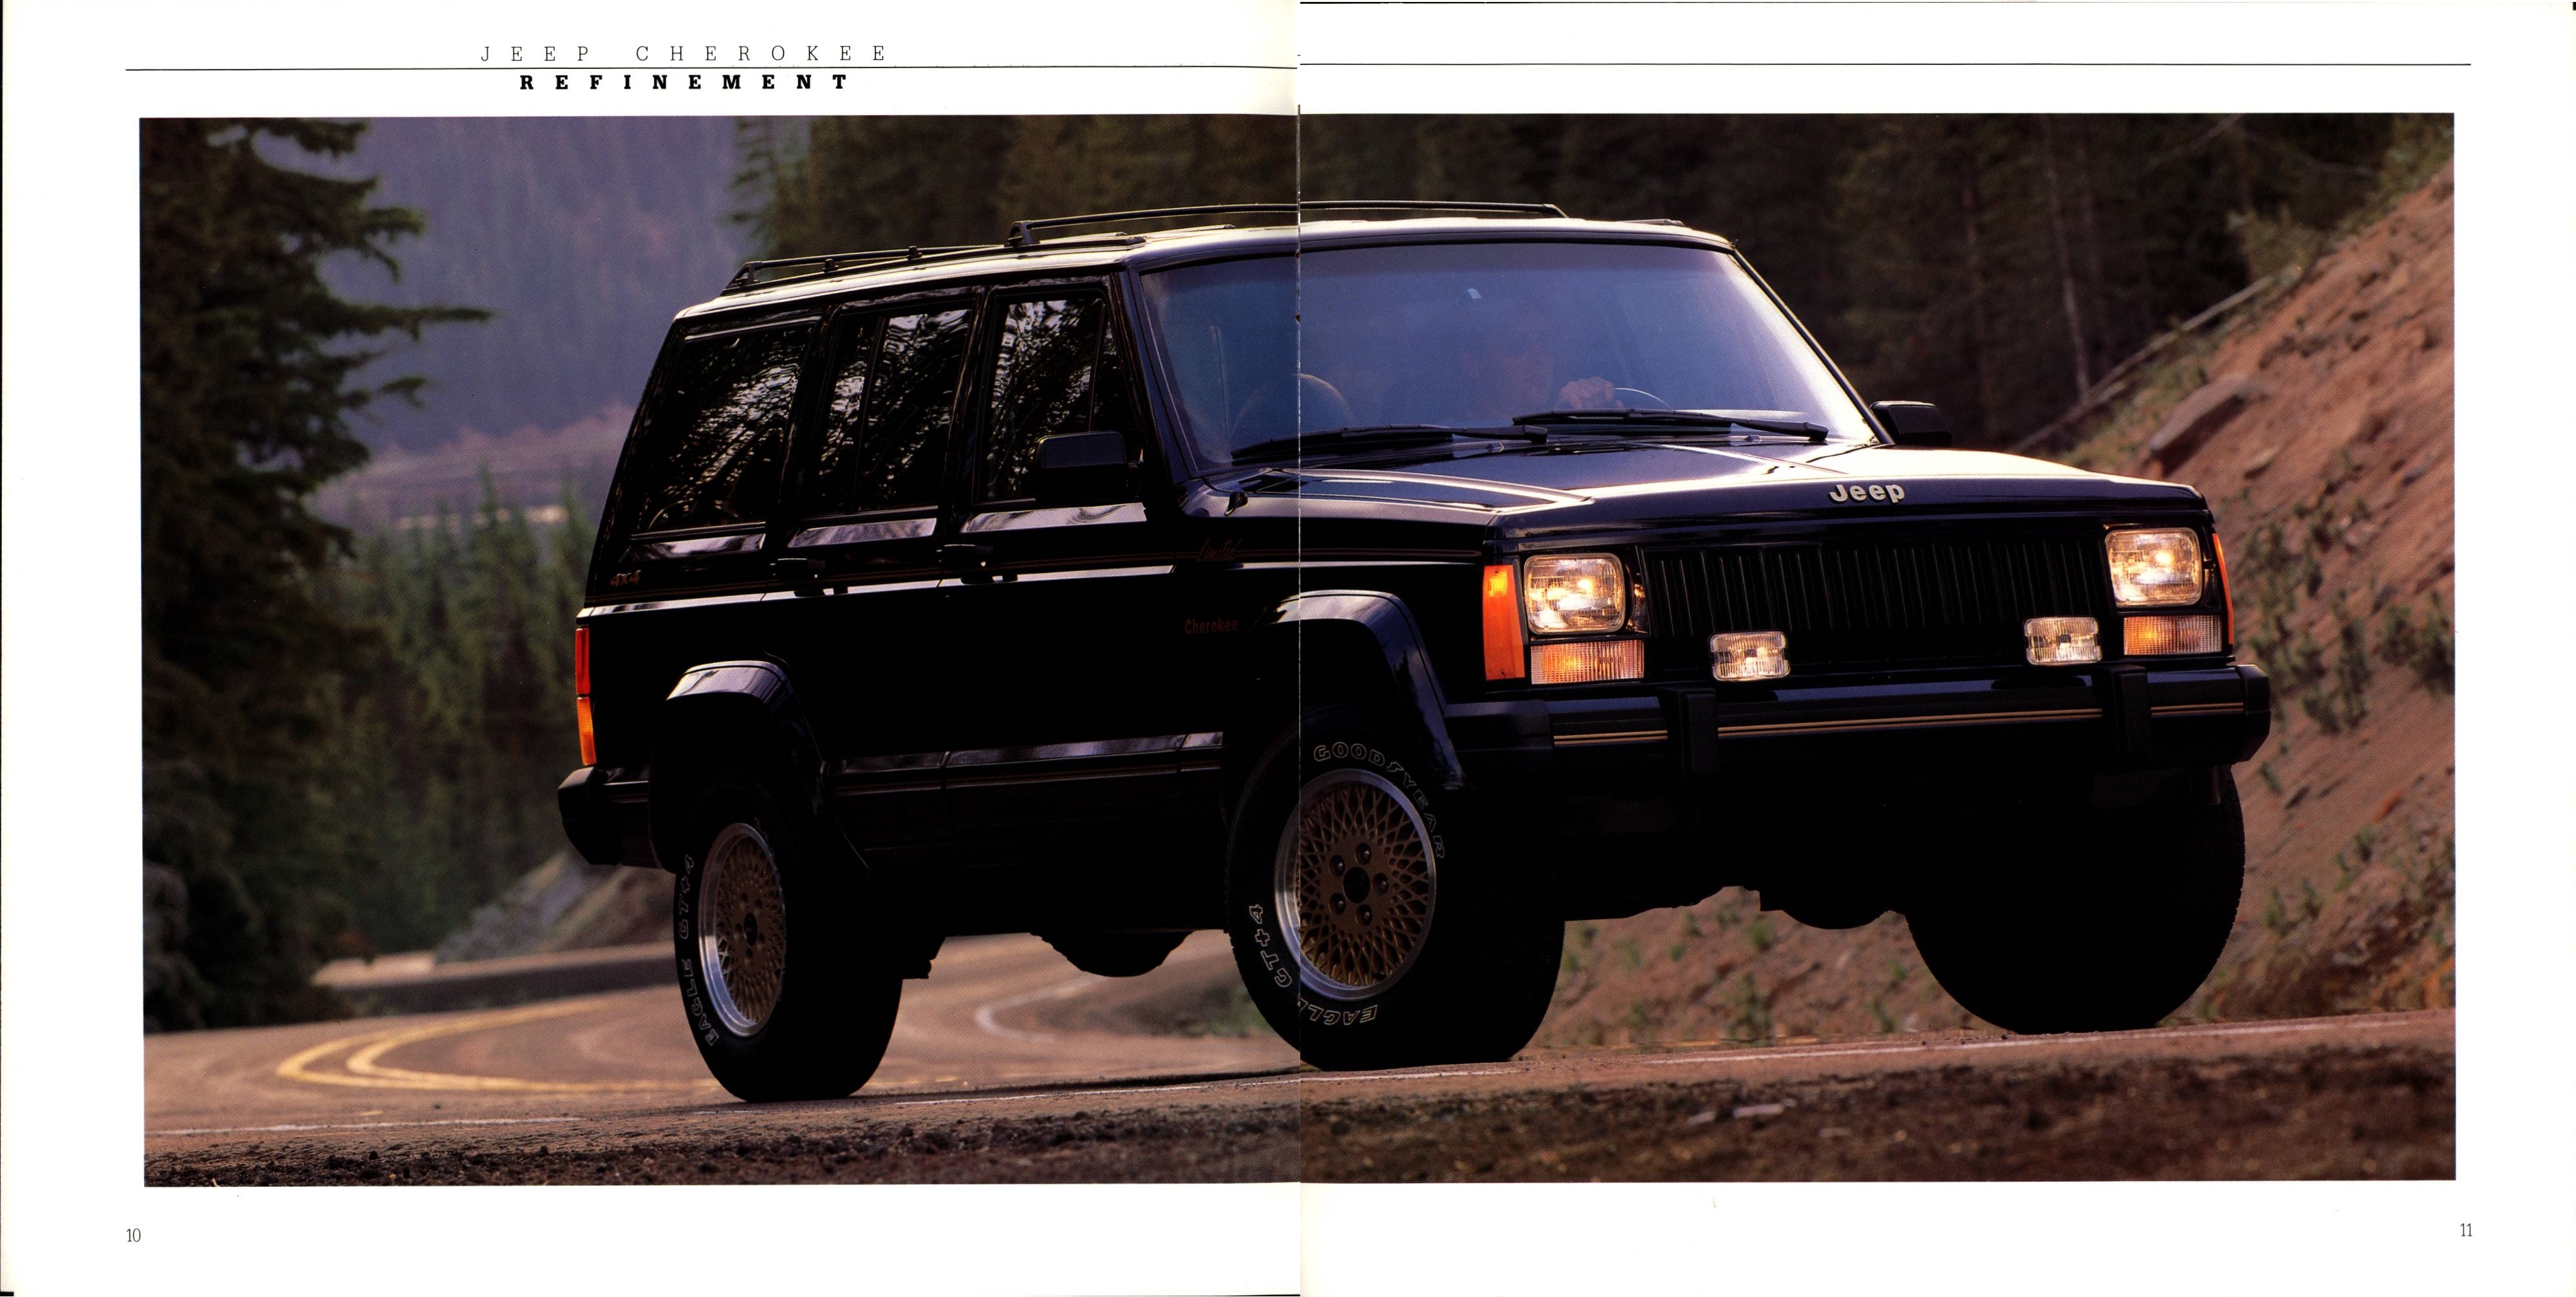 1988 Jeep Cherokee Brochure (Rev) 10-11